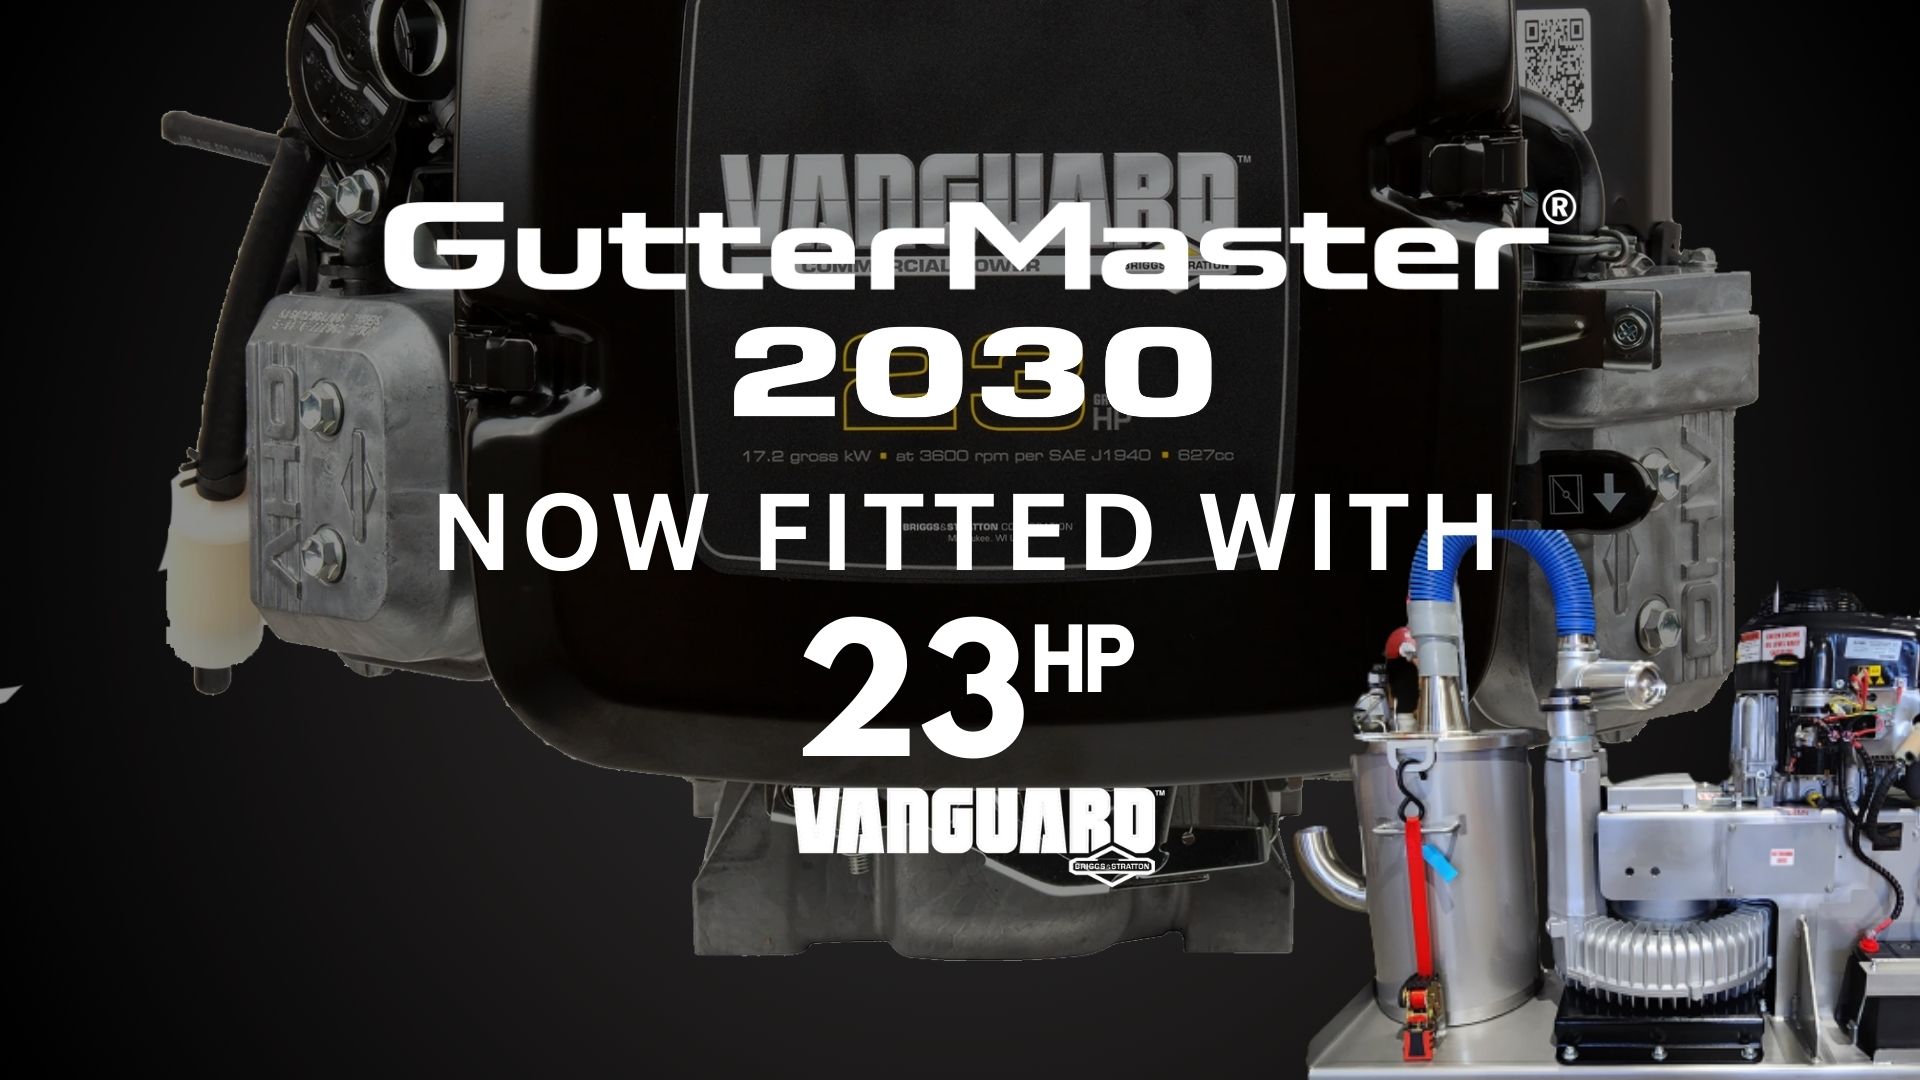 Gutter vacuum system gatter master 2030